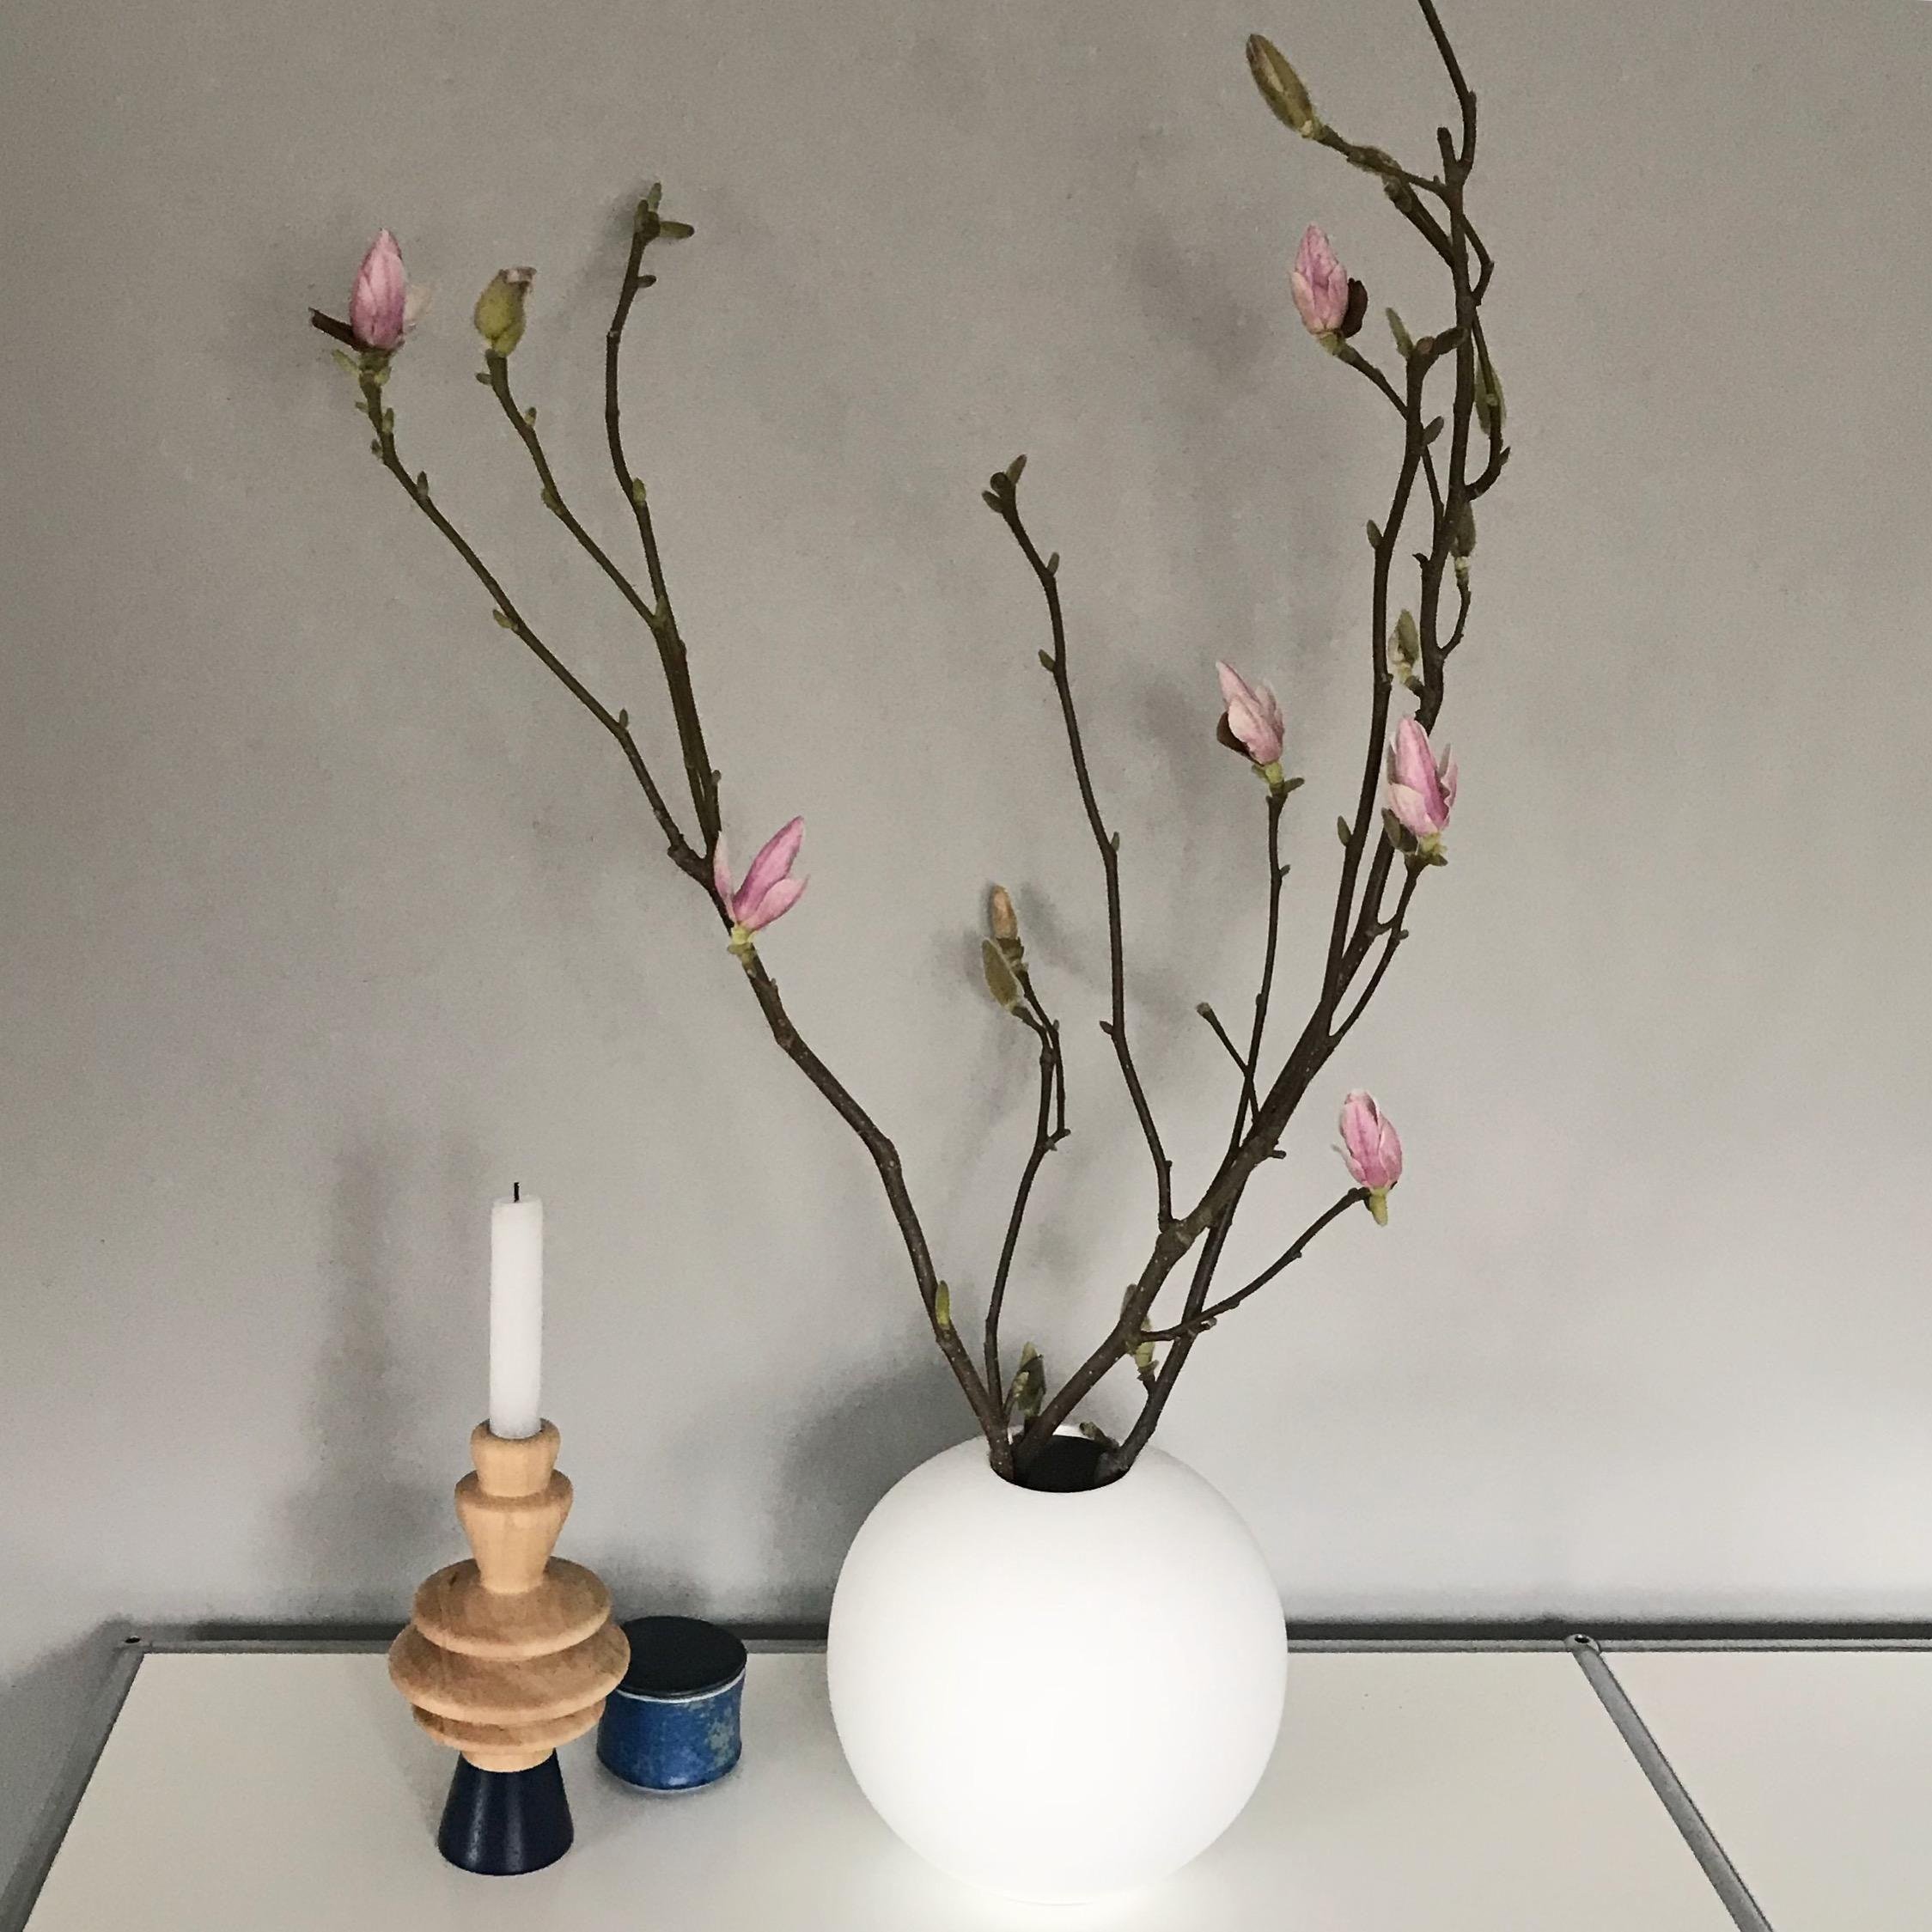 #magnolie #flowers #cooee #usm #deko #wohnzimmer #livingroom